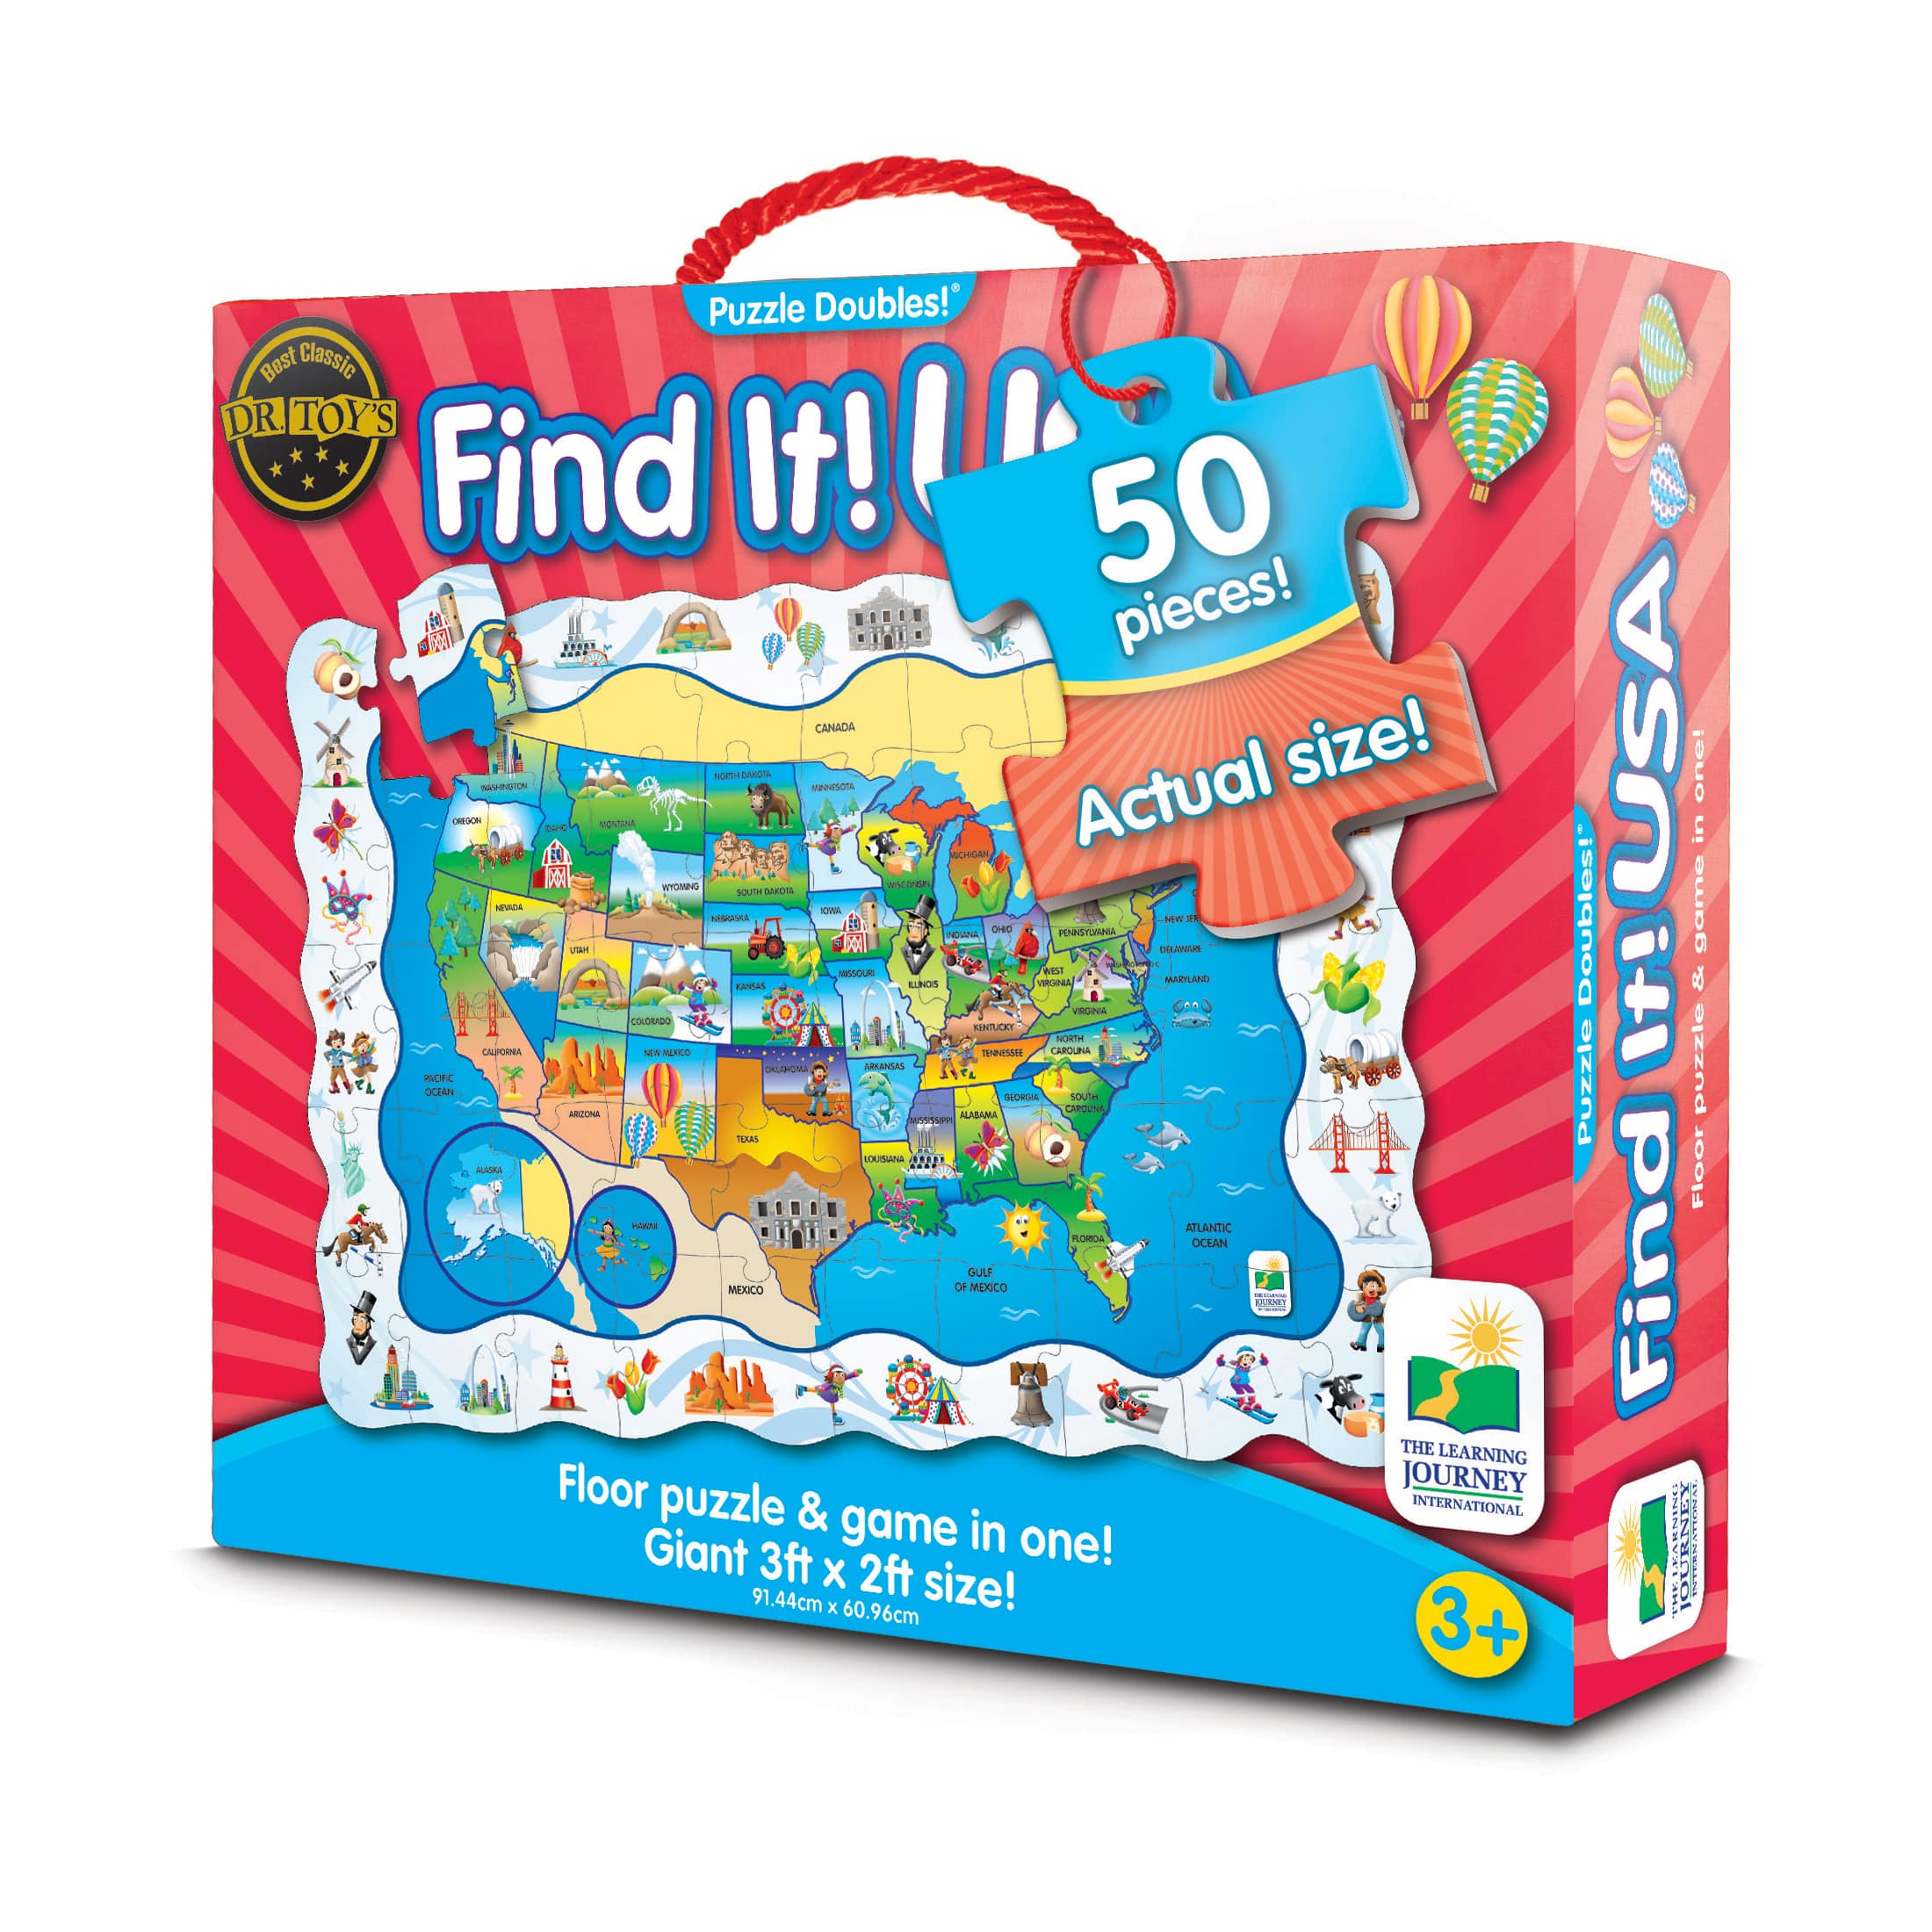 Puzzle Doubles!&#xAE; Find It! USA 50 Piece Puzzle